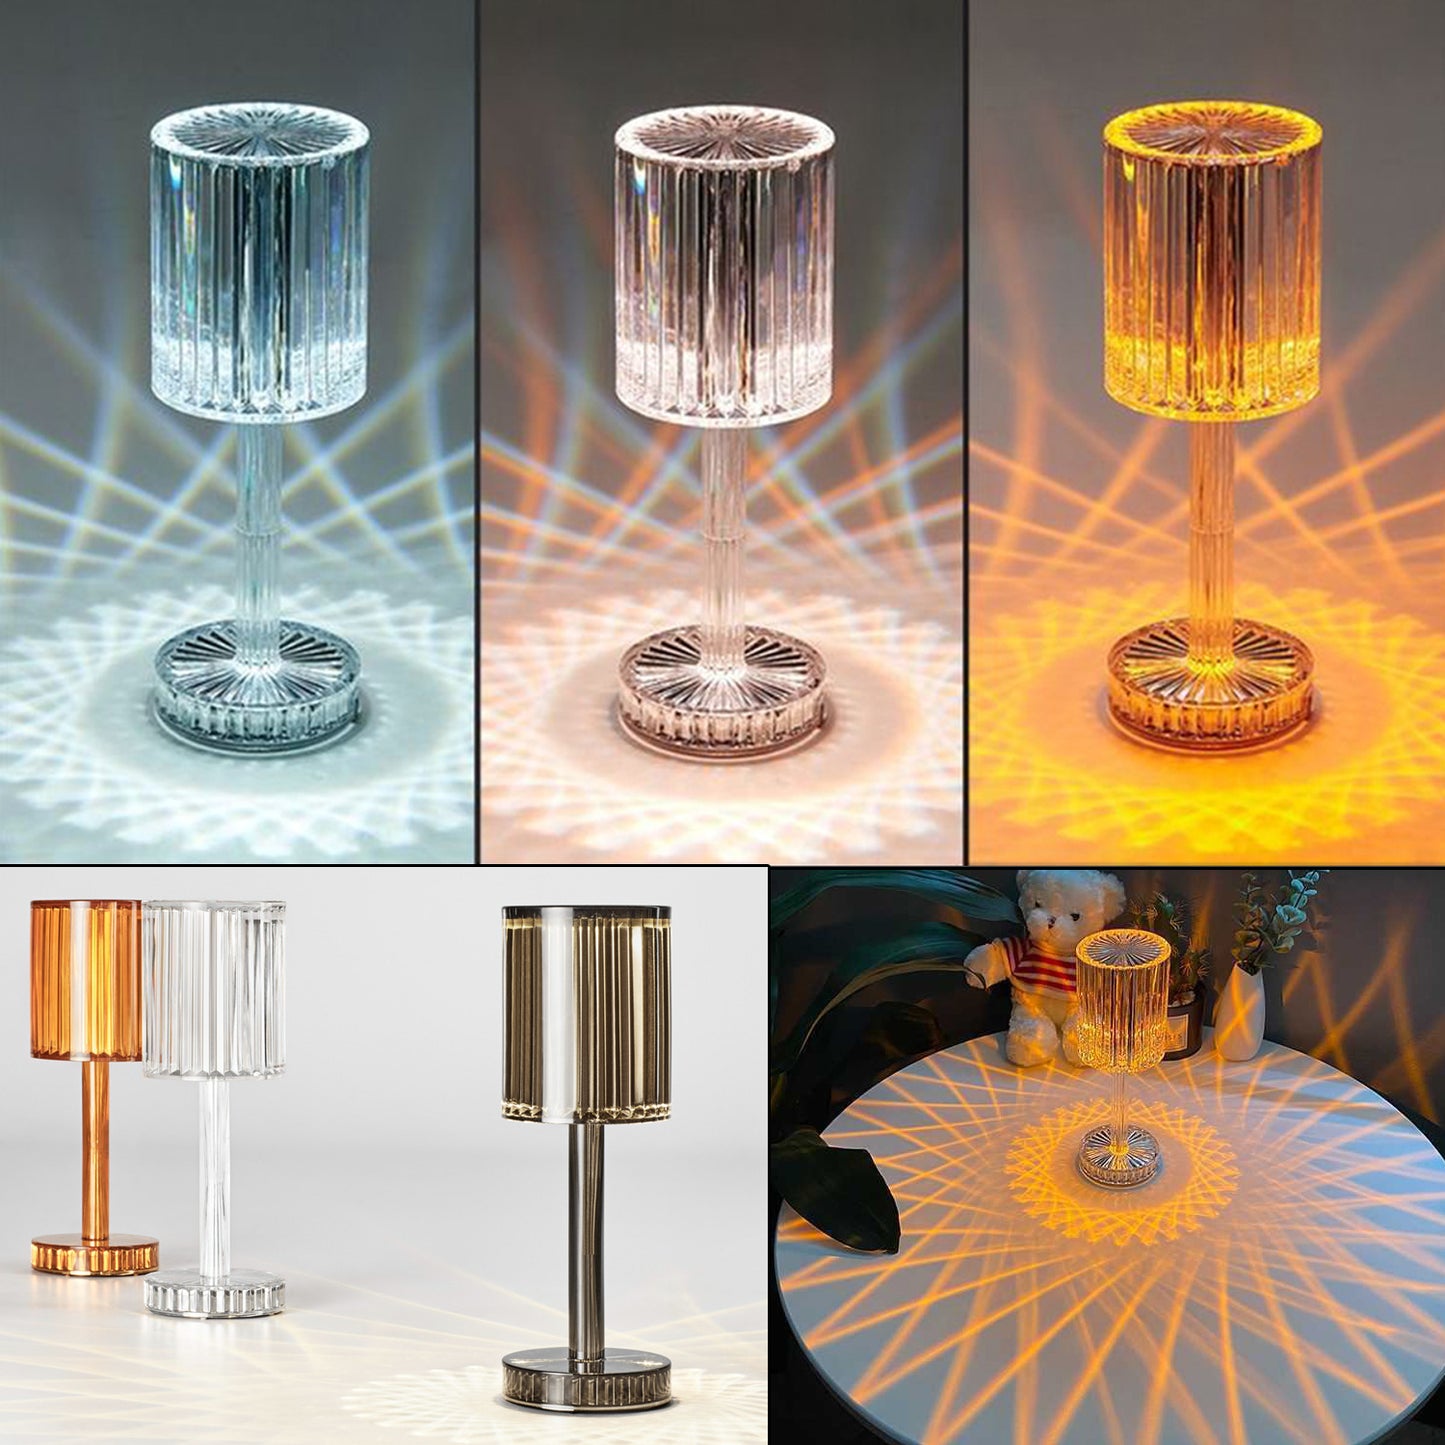 New Crystal Table Lamp Hotel Decoration Diamond Romantic Warm Led For Home Decor Romantic Gift Night Light - Eva store